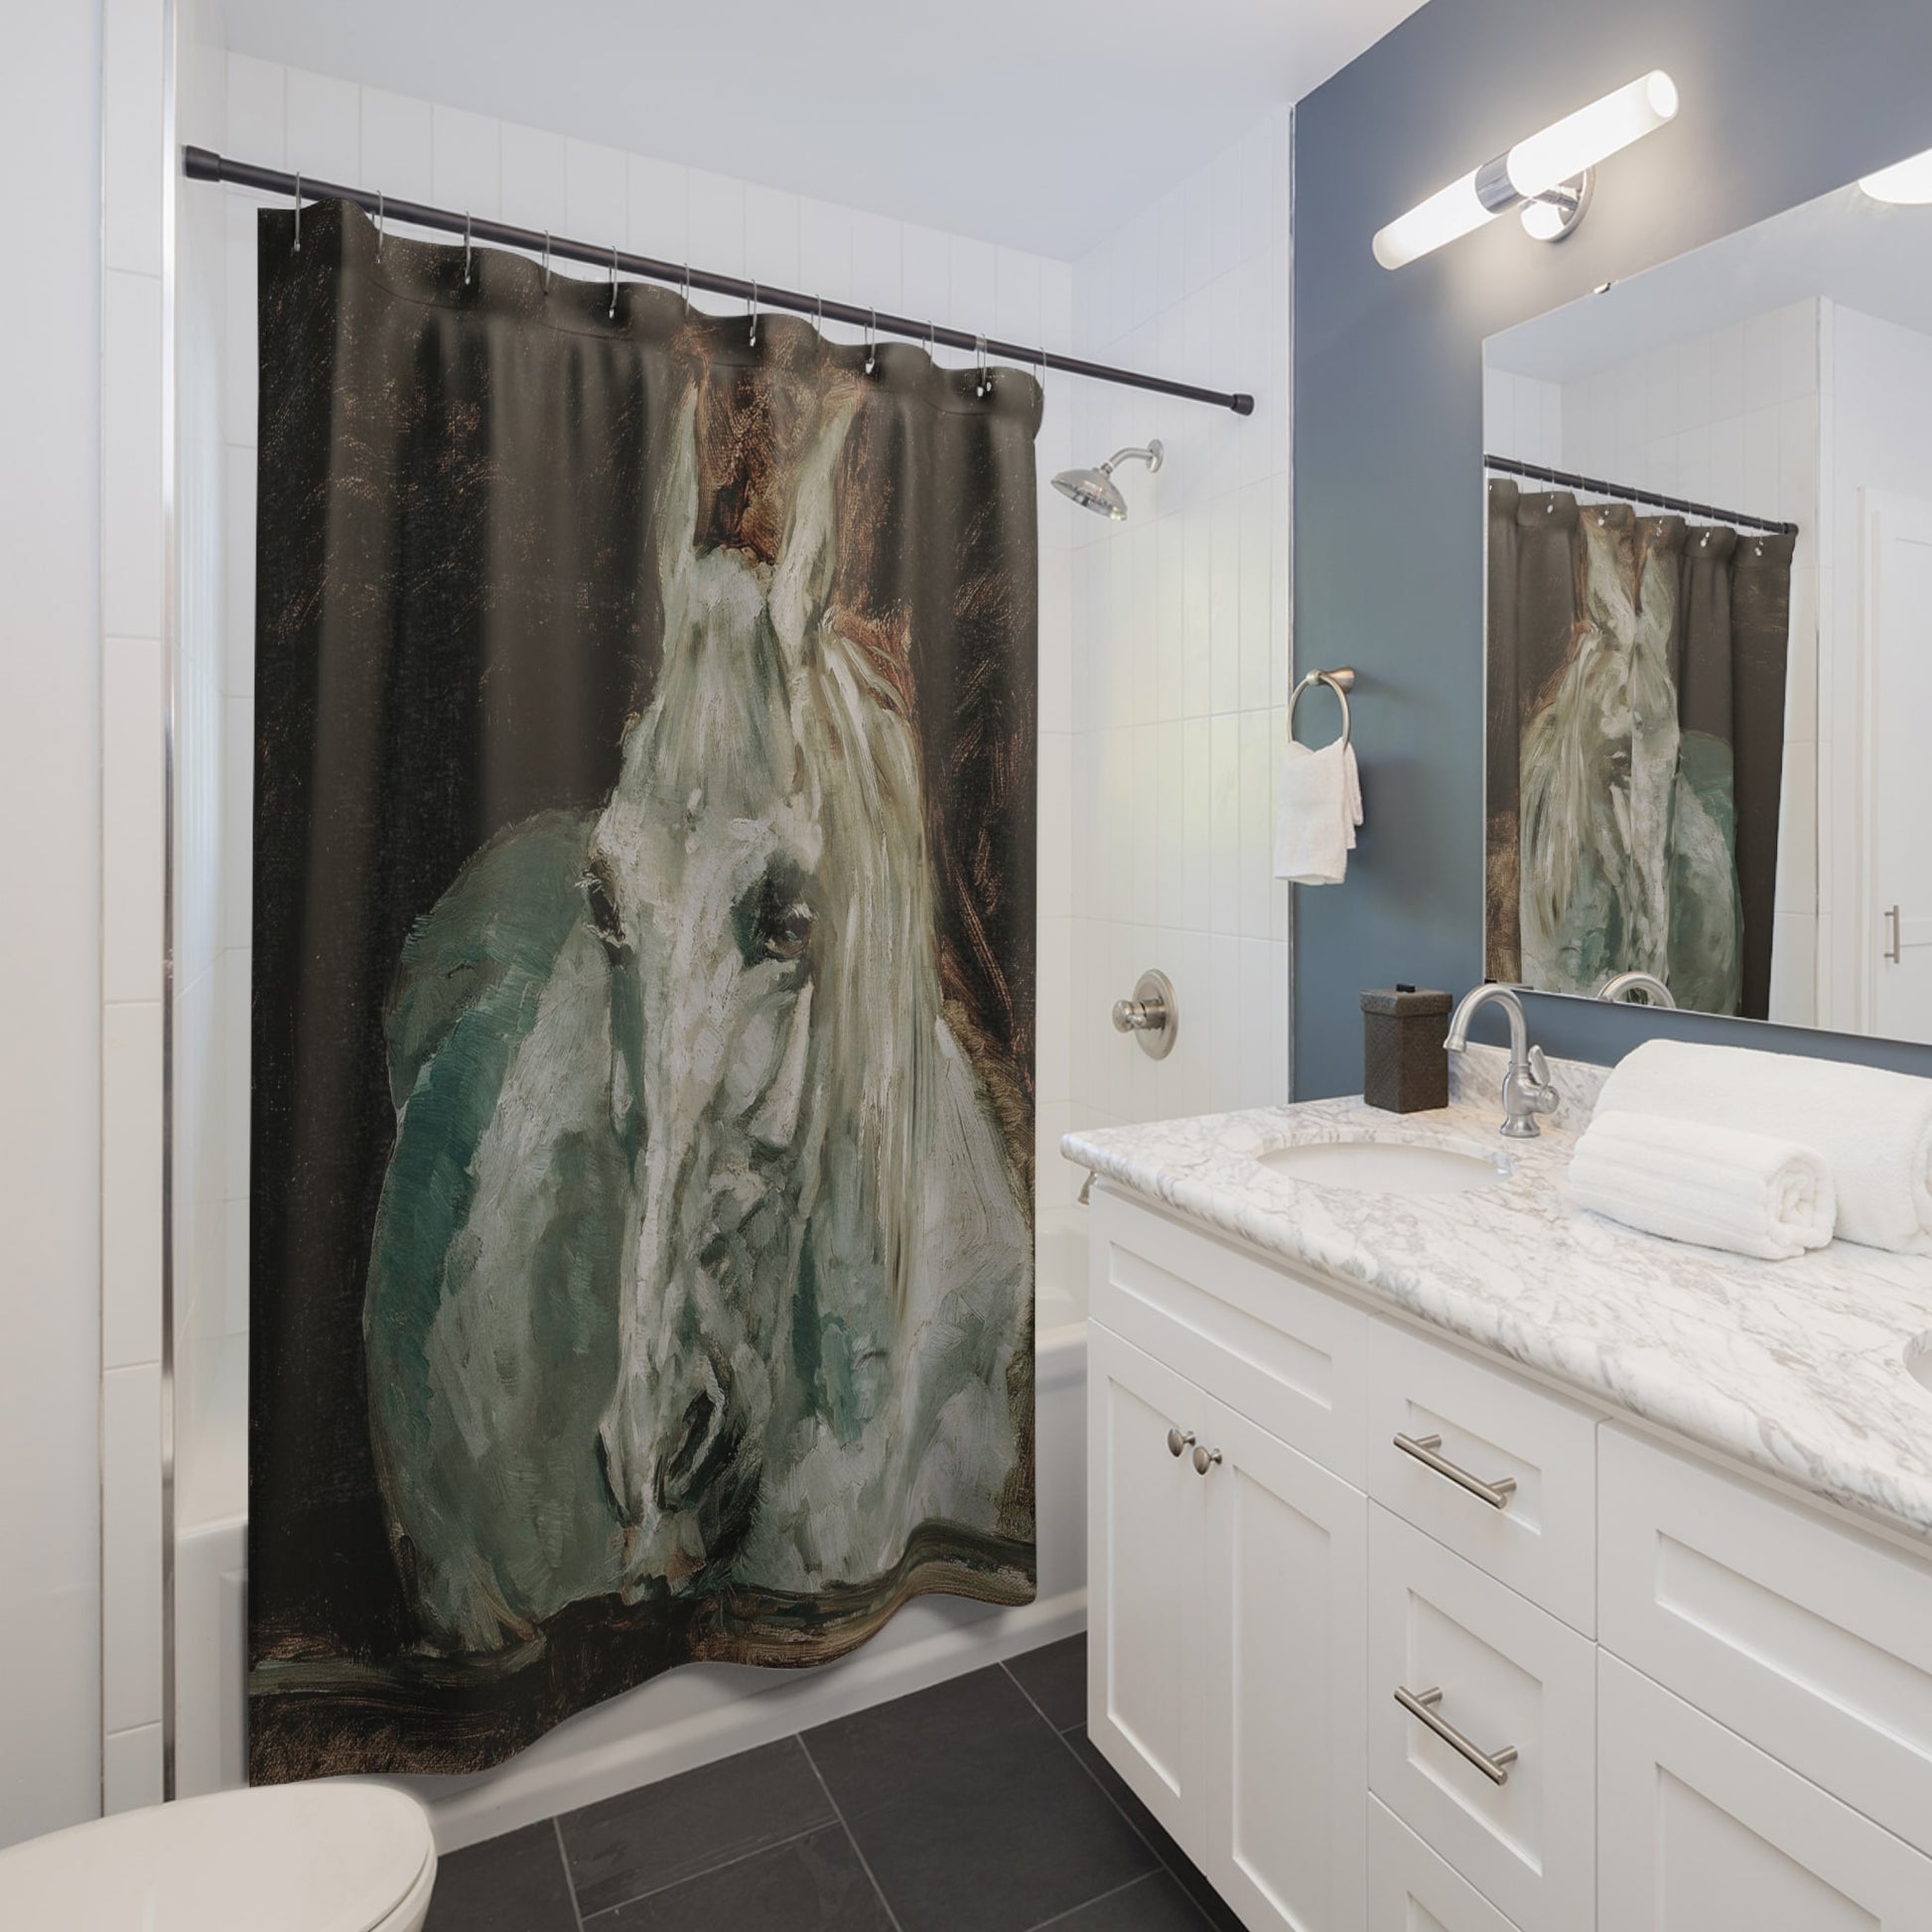 Abstract Wild Animal Shower Curtain Best Bathroom Decorating Ideas for Animal Decor